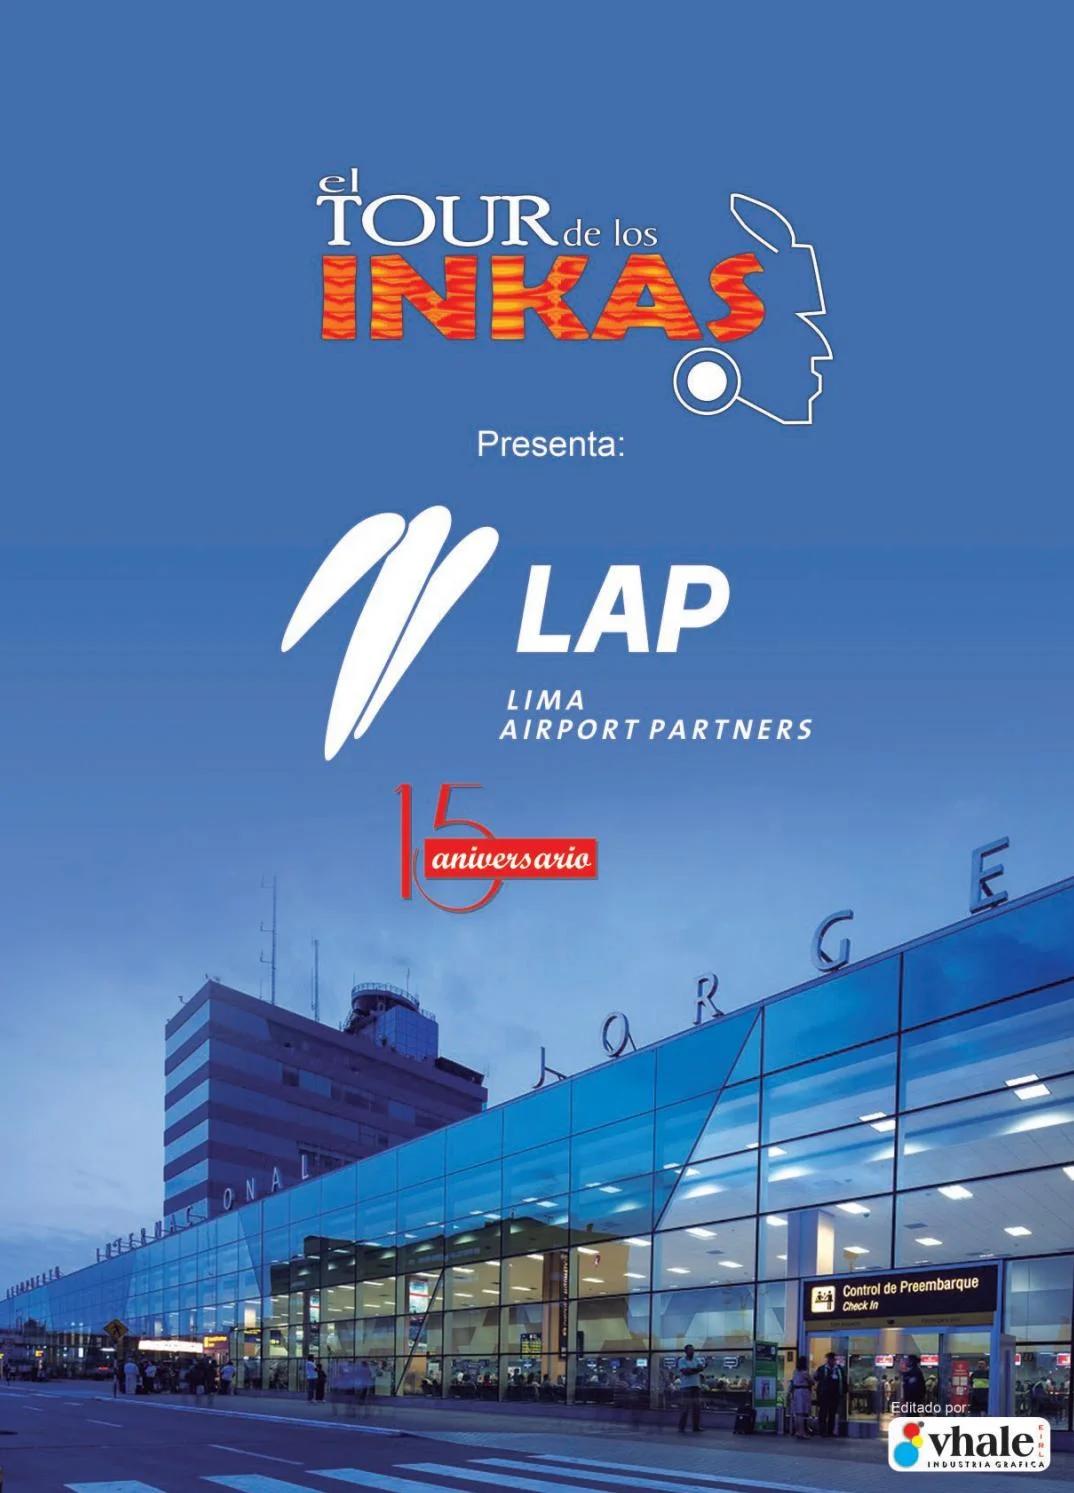 lim airport auditoria interna - Cuántos pasajeros recibe el Aeropuerto Jorge Chávez